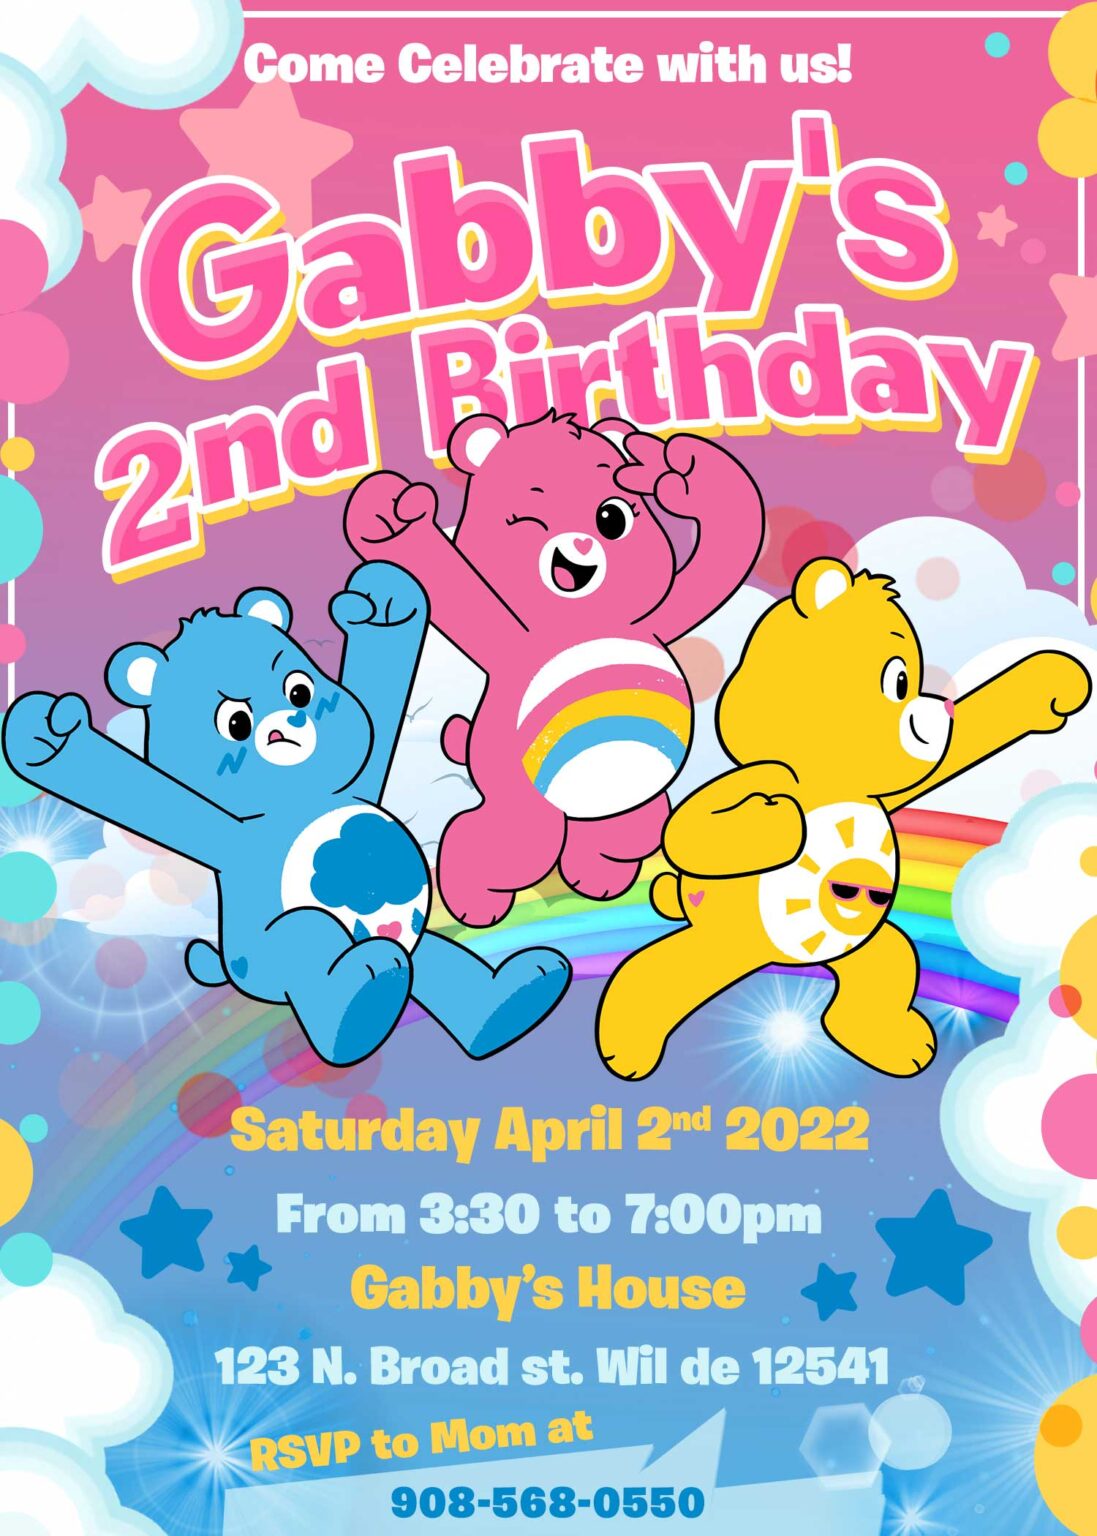 care-bears-birthday-invitation-sweet-invite